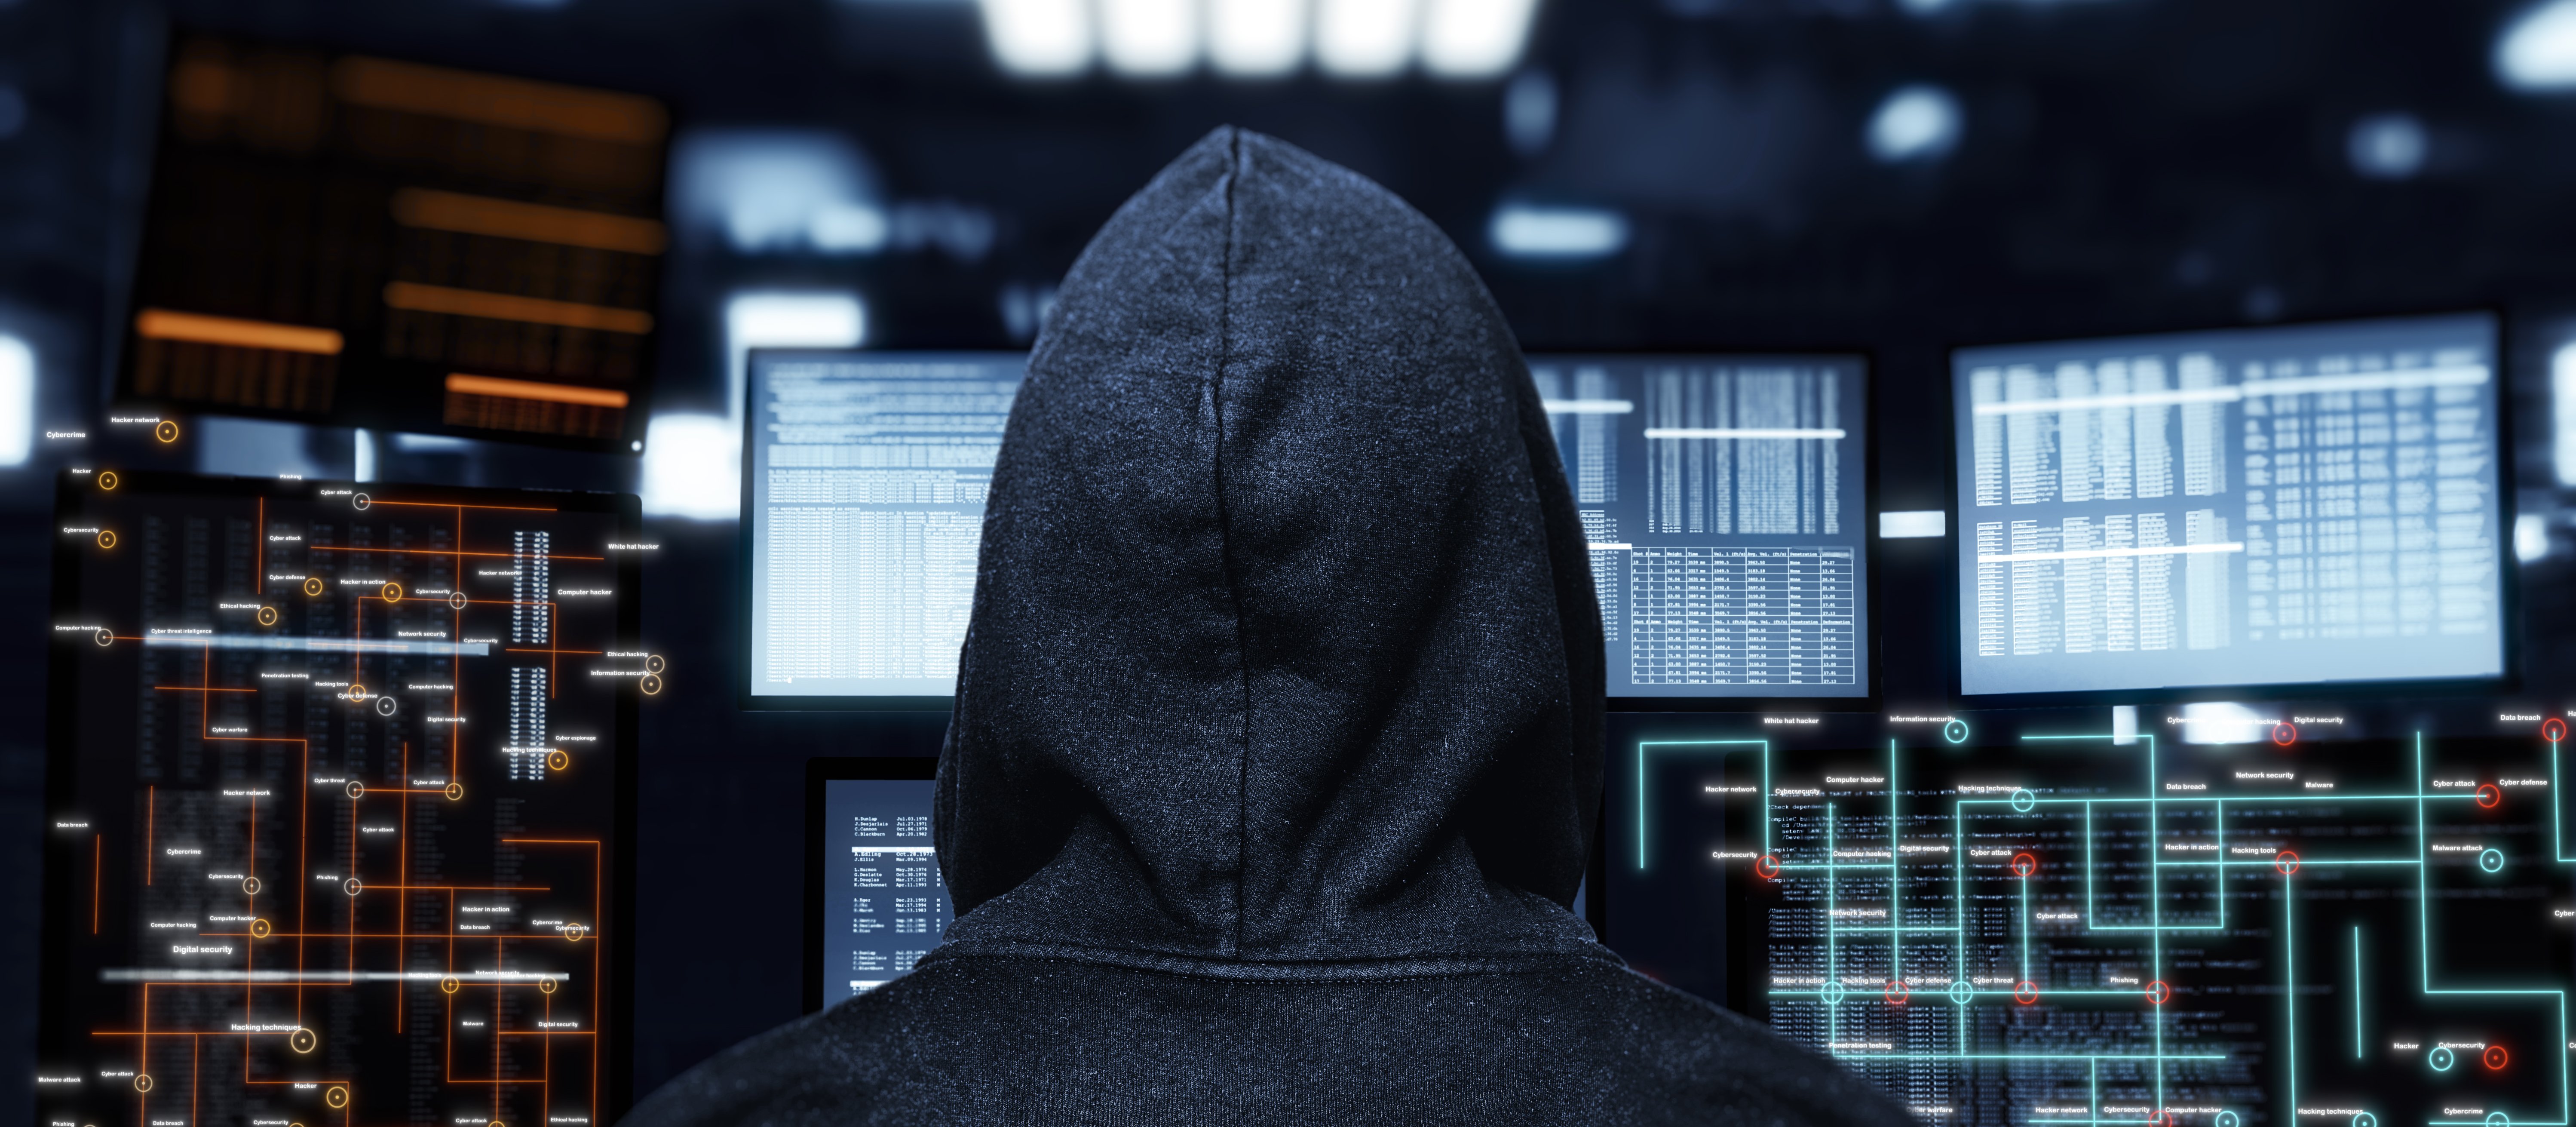 Cybercrime [Image: dem10 on iStock]